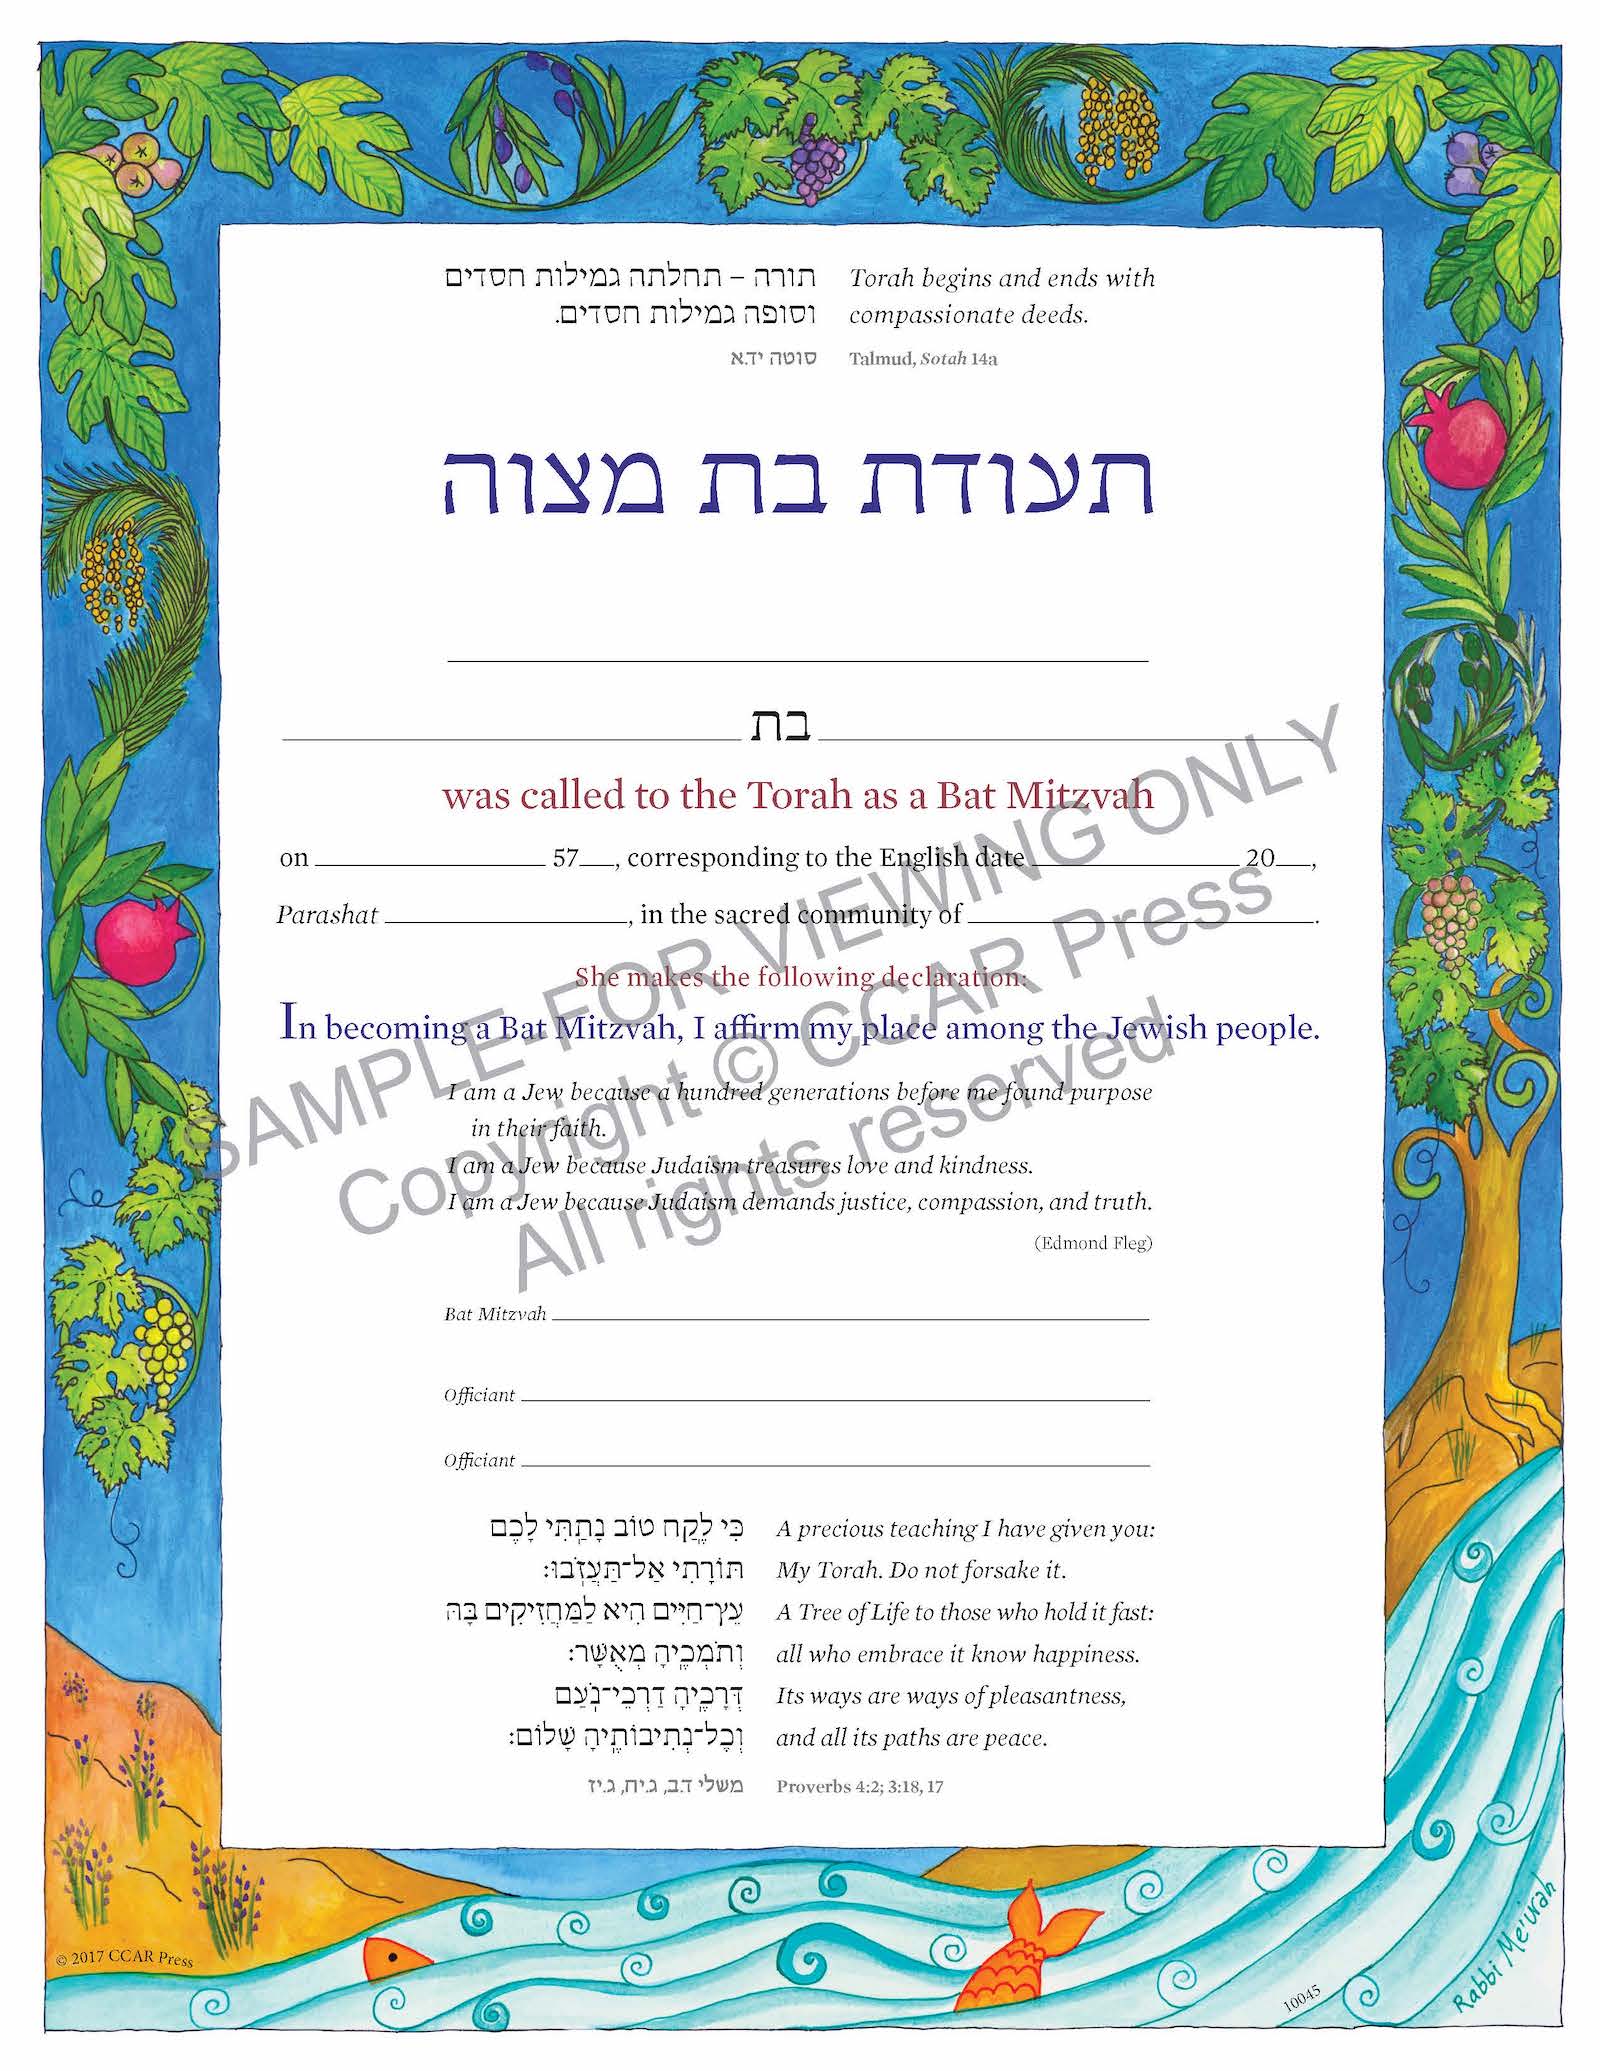 Bat Mitzvah - Certificate